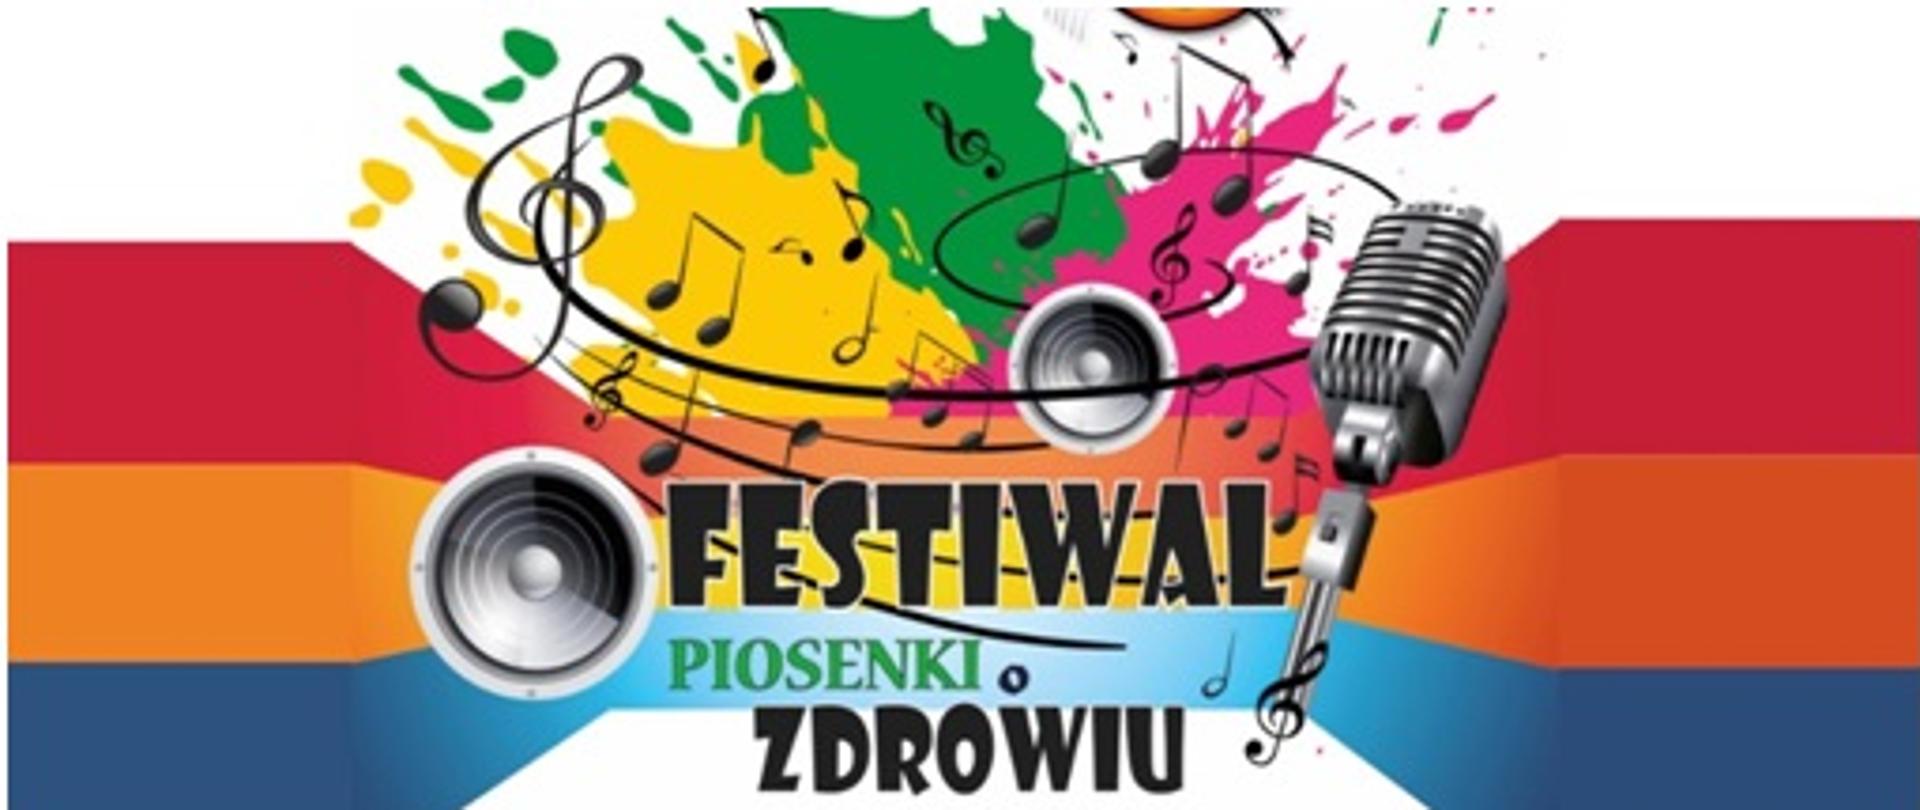 Festiwal Piosenki o Zdrowiu